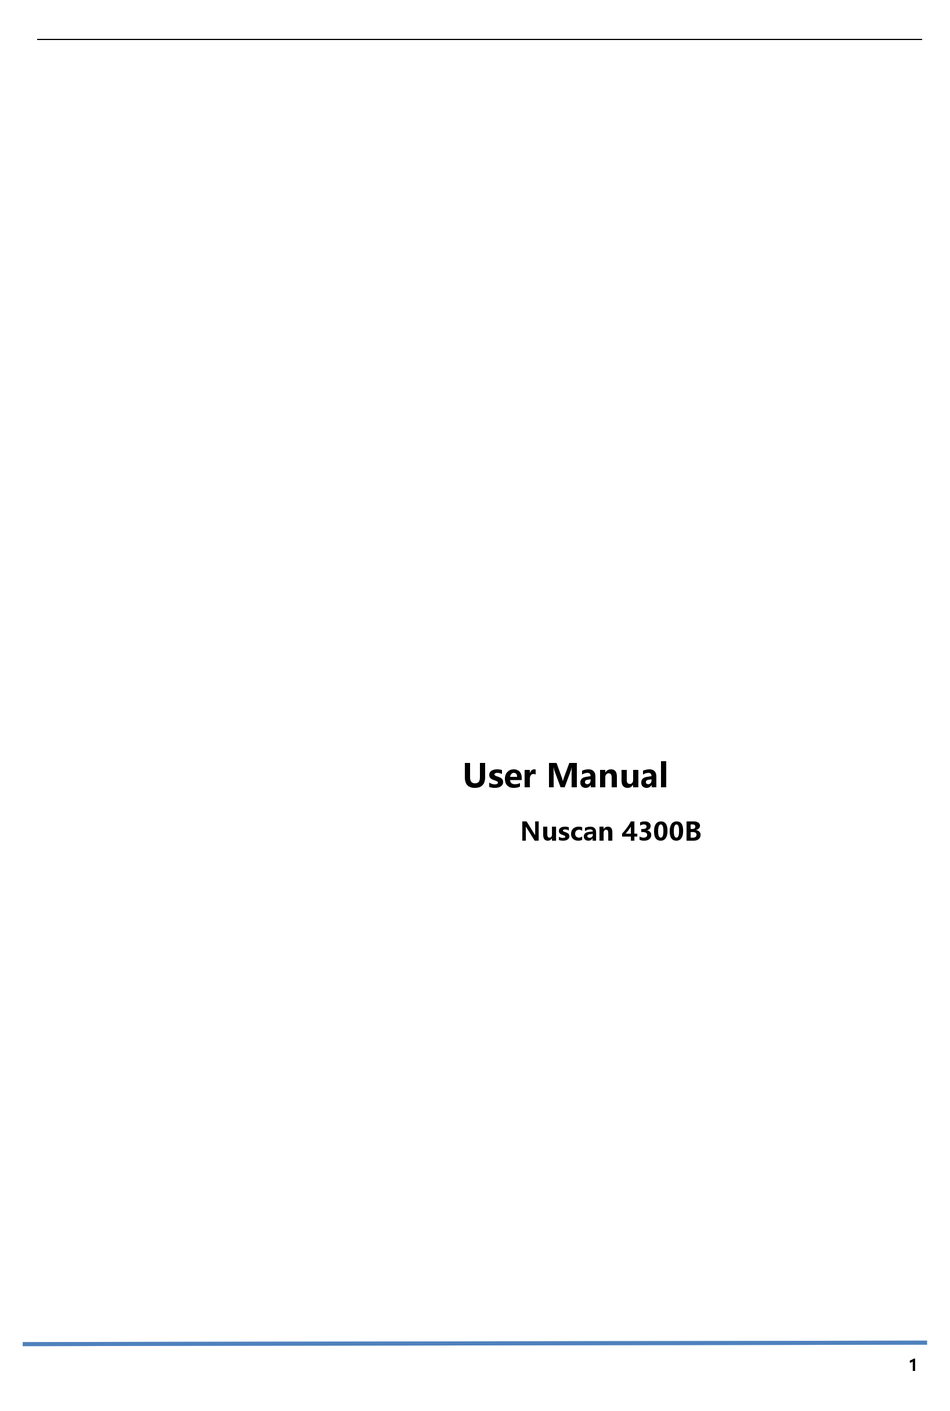 ADESSO NUSCAN 4300B USER MANUAL Pdf Download | ManualsLib